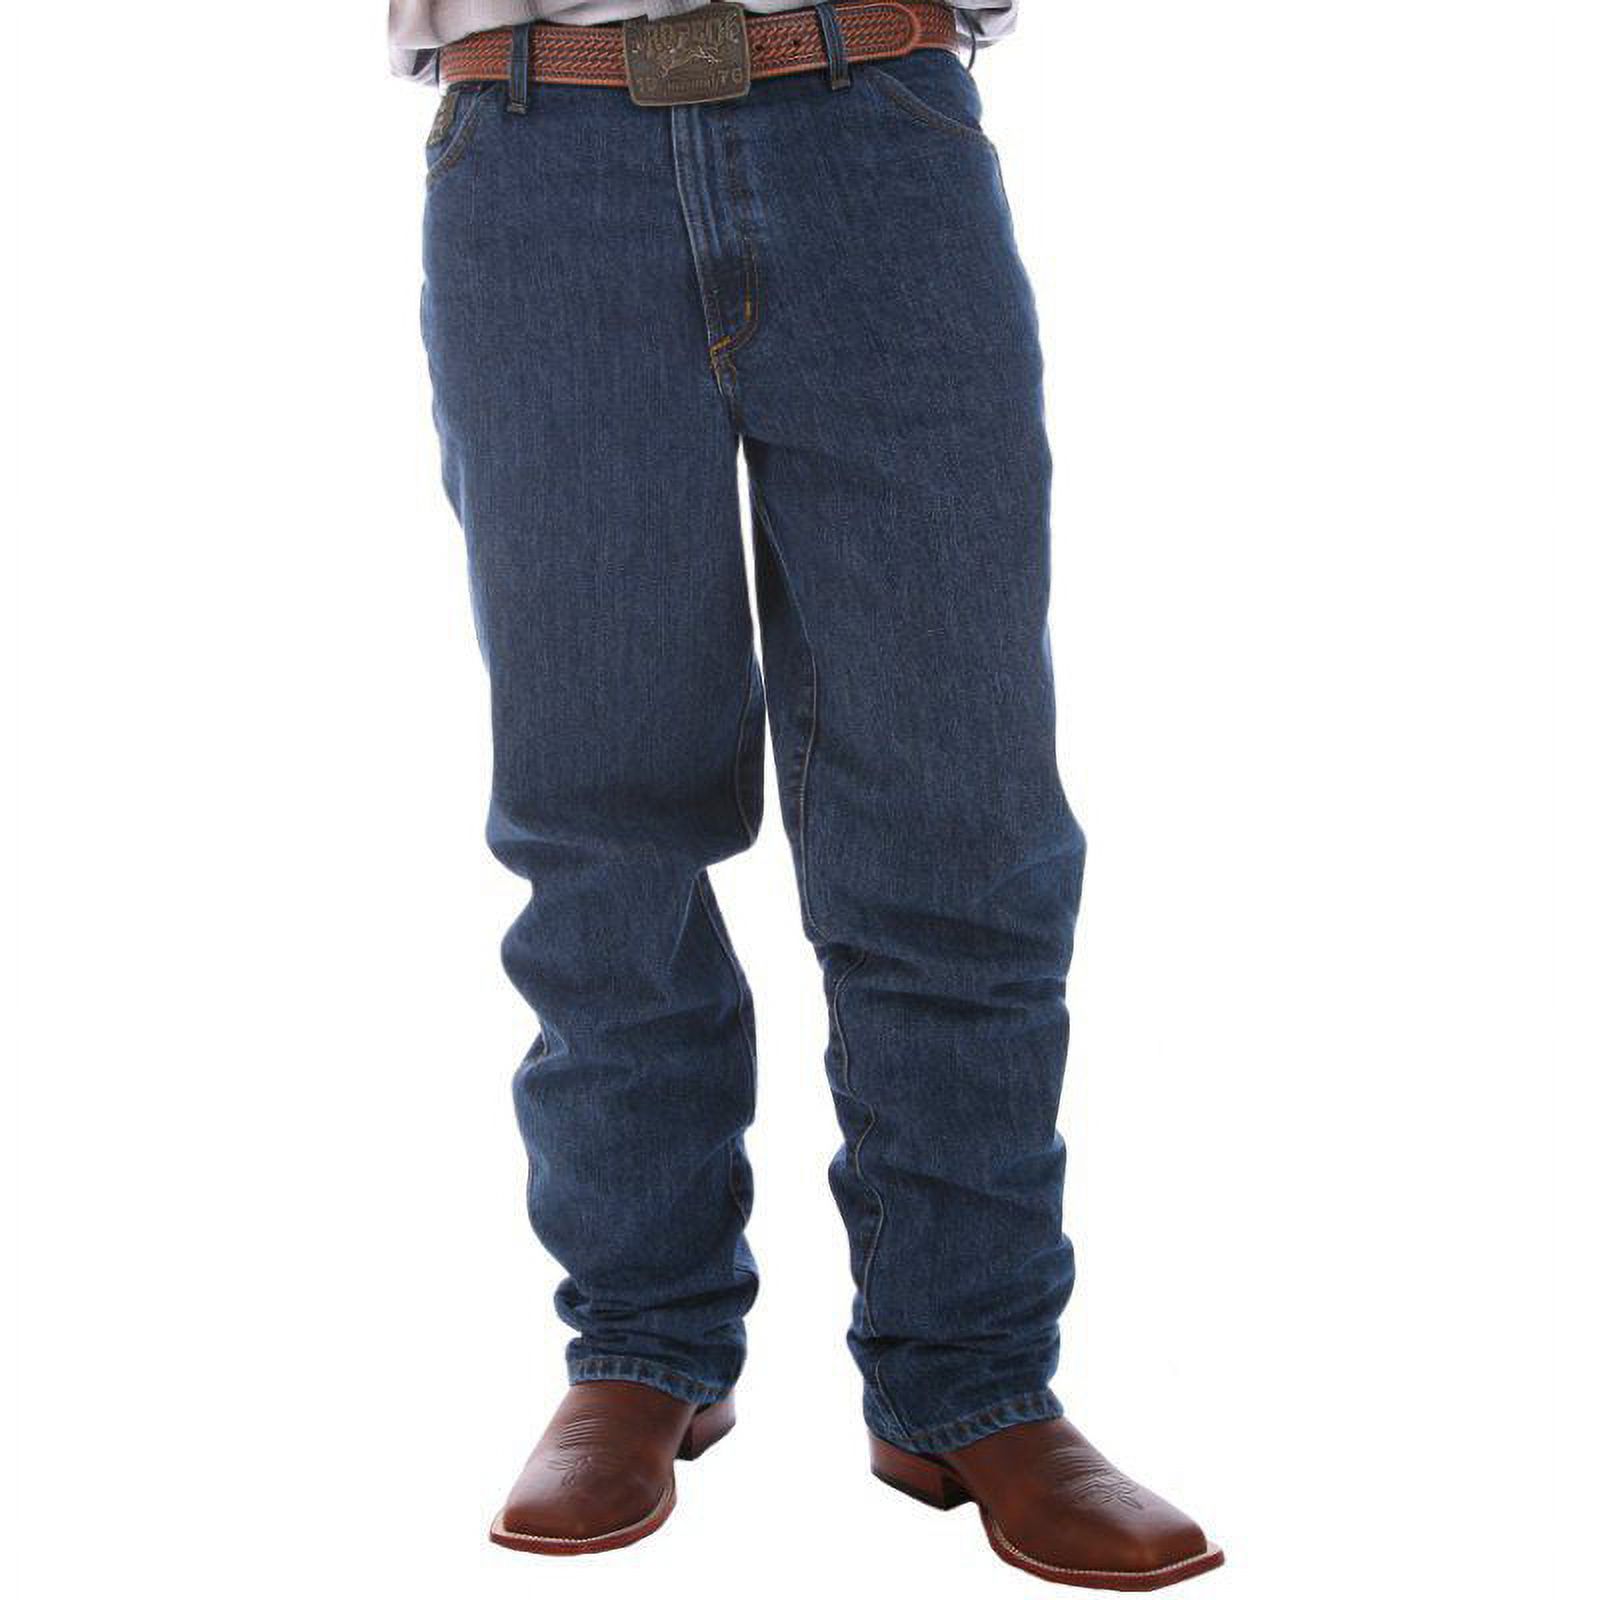 Cinch Apparel Mens Green Label Original Fit Jeans 46x38 Dark Stonewash - image 4 of 4